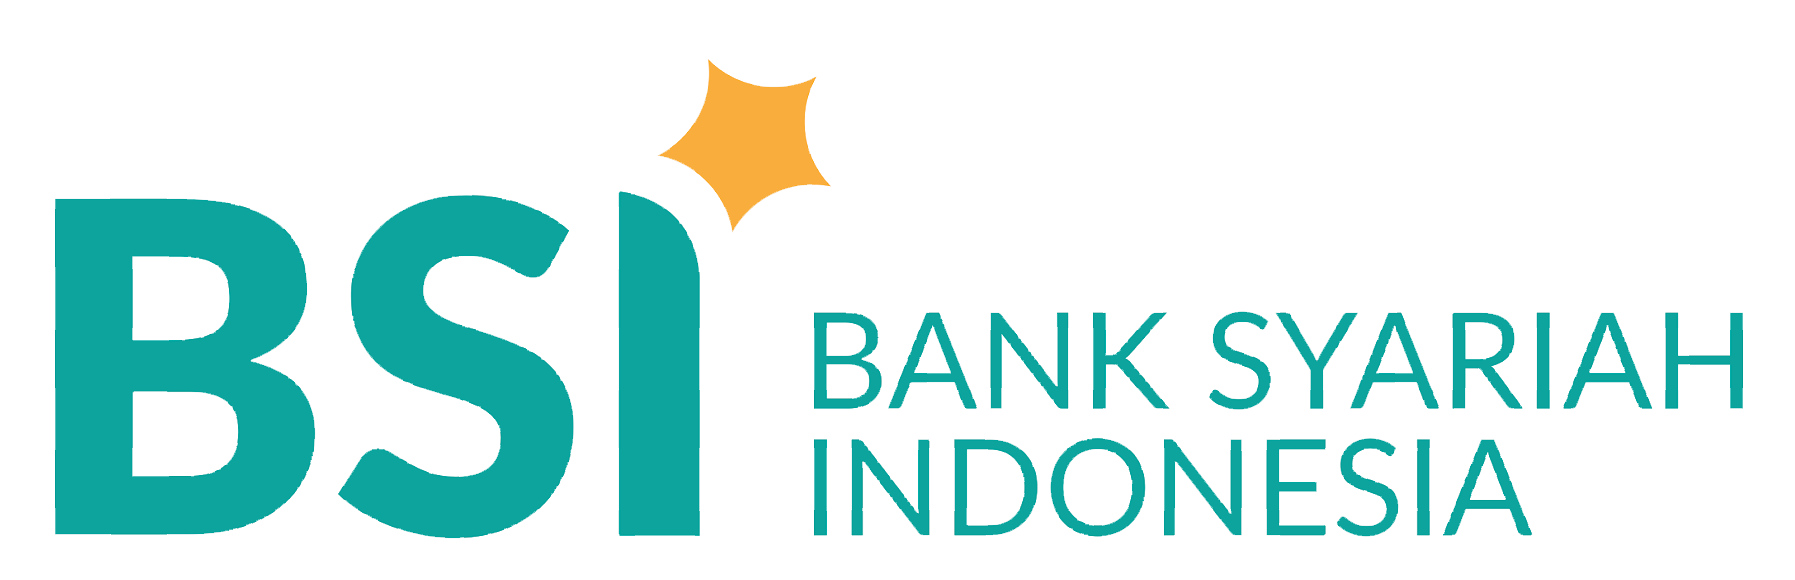 BSI (Bank Syariah Indonesia) Logo - Download Free Vector PNG